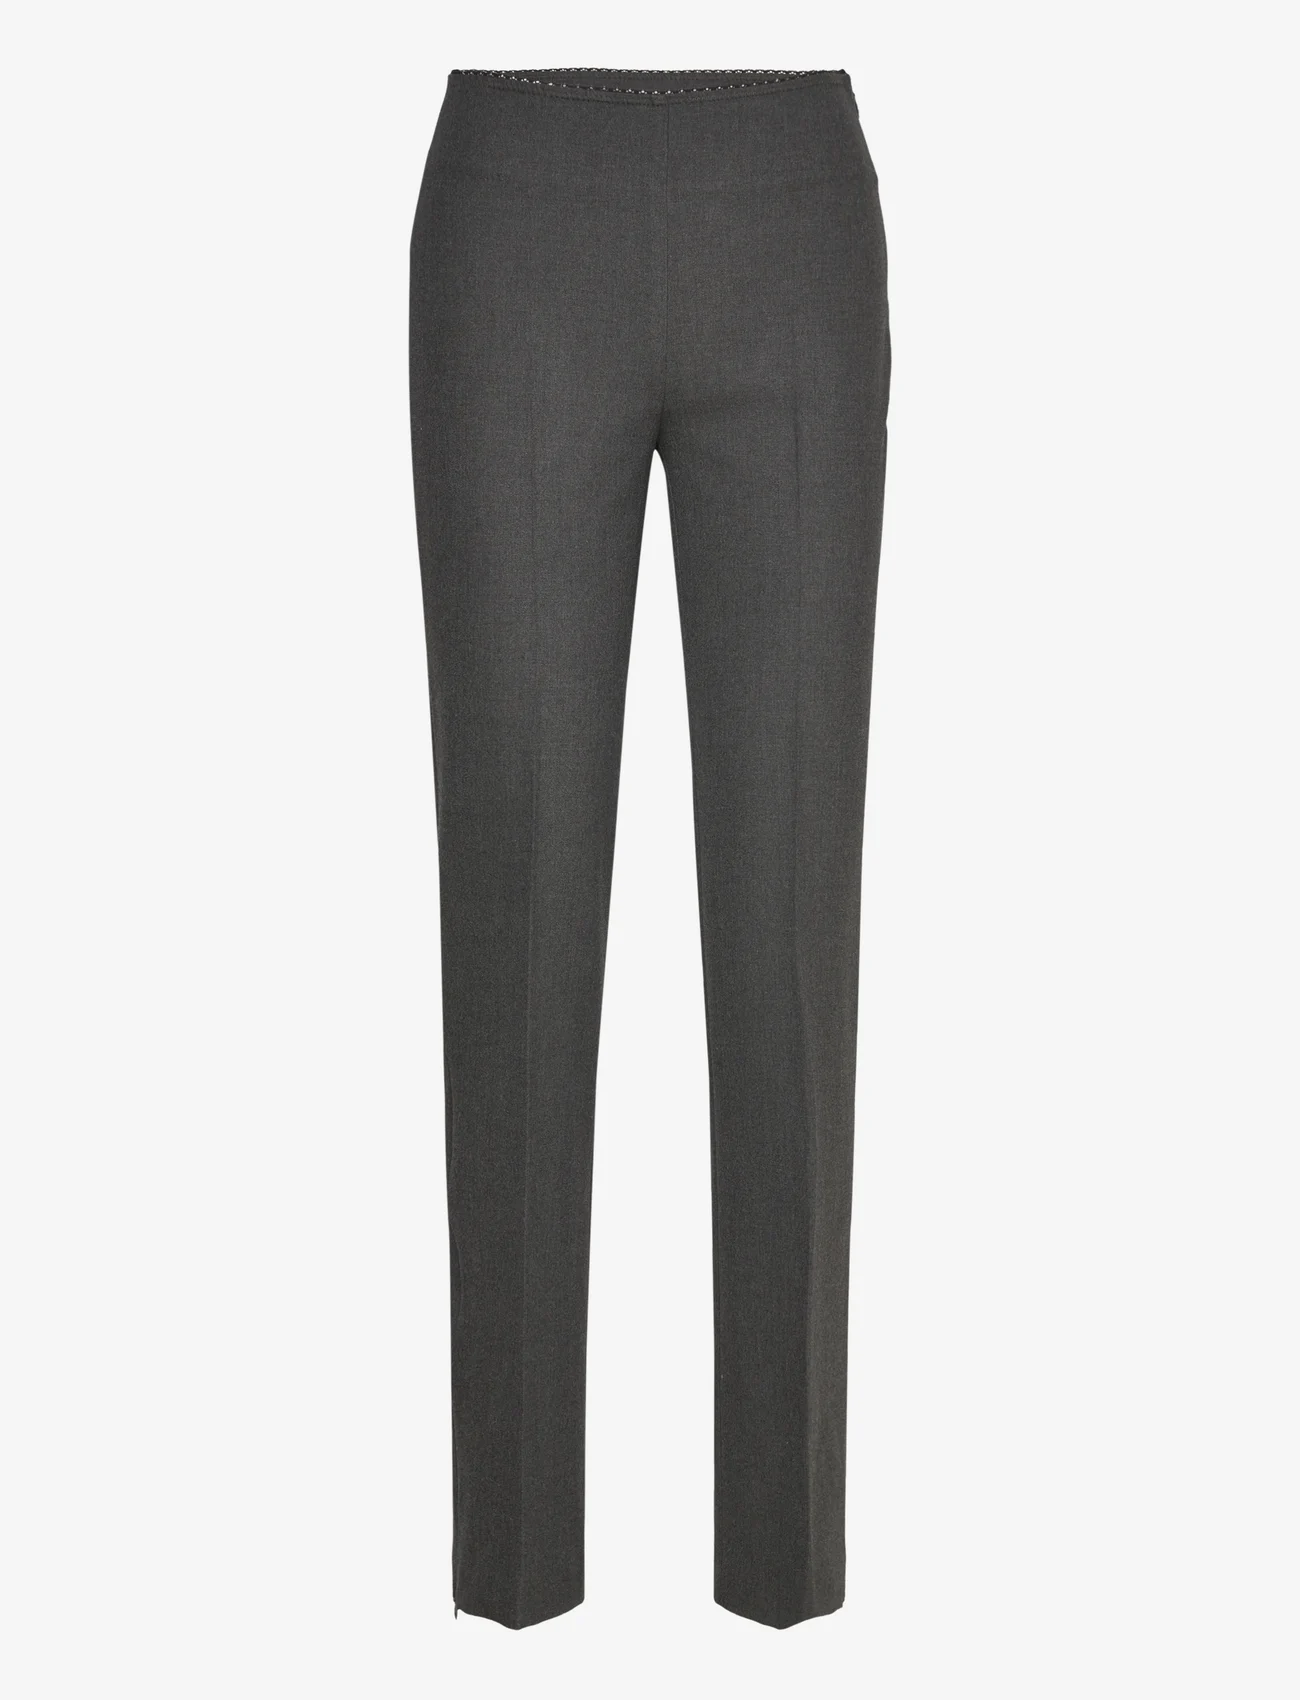 Mango - Pants bottom side zipper - habitbukser - lt pastel grey - 0